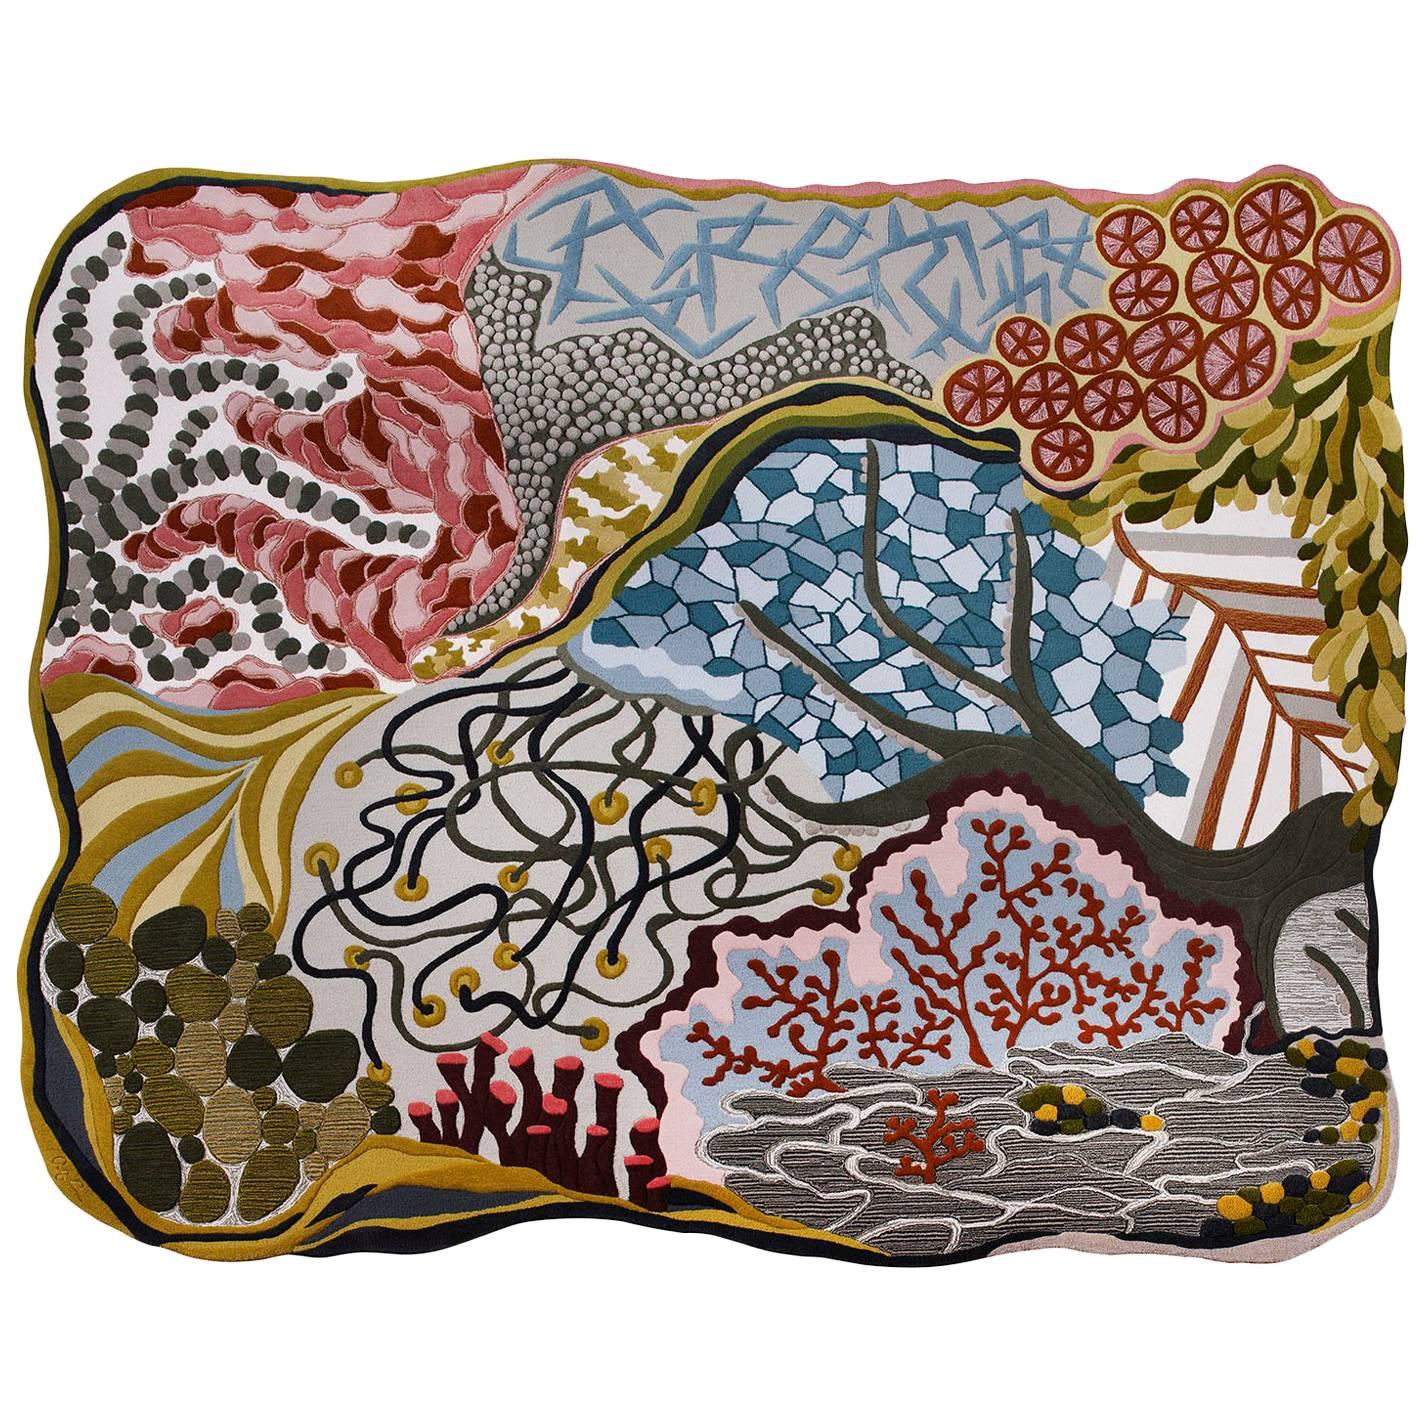 Angela Adams Ocean Floor Area Rug & Tapestry, One-of-a-kind, Handcrafted, Modern For Sale